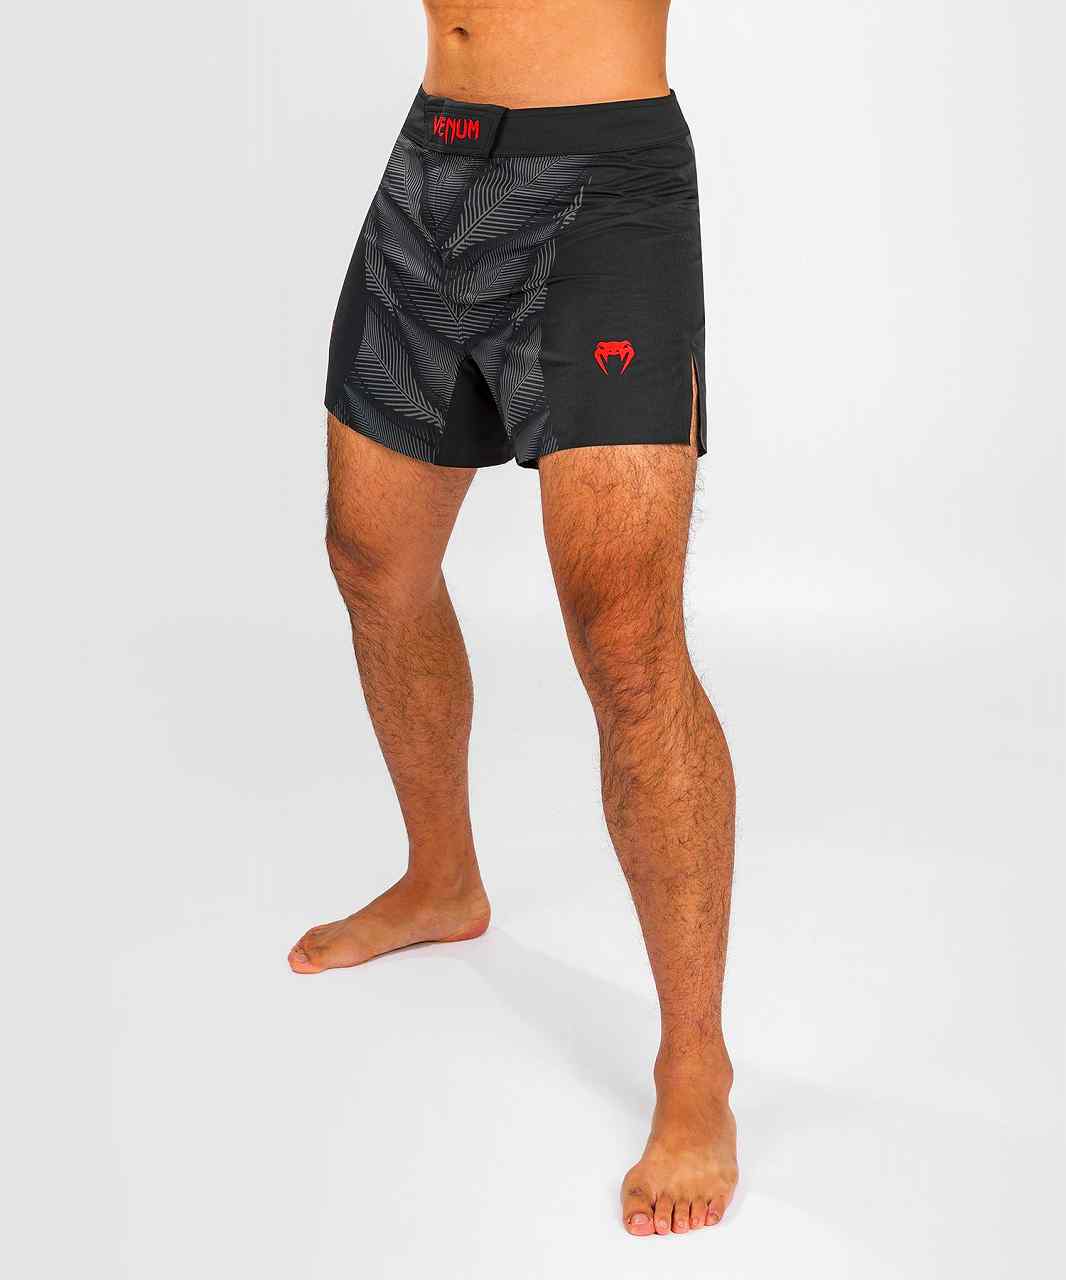 VENUM Shorts ,Spats Available